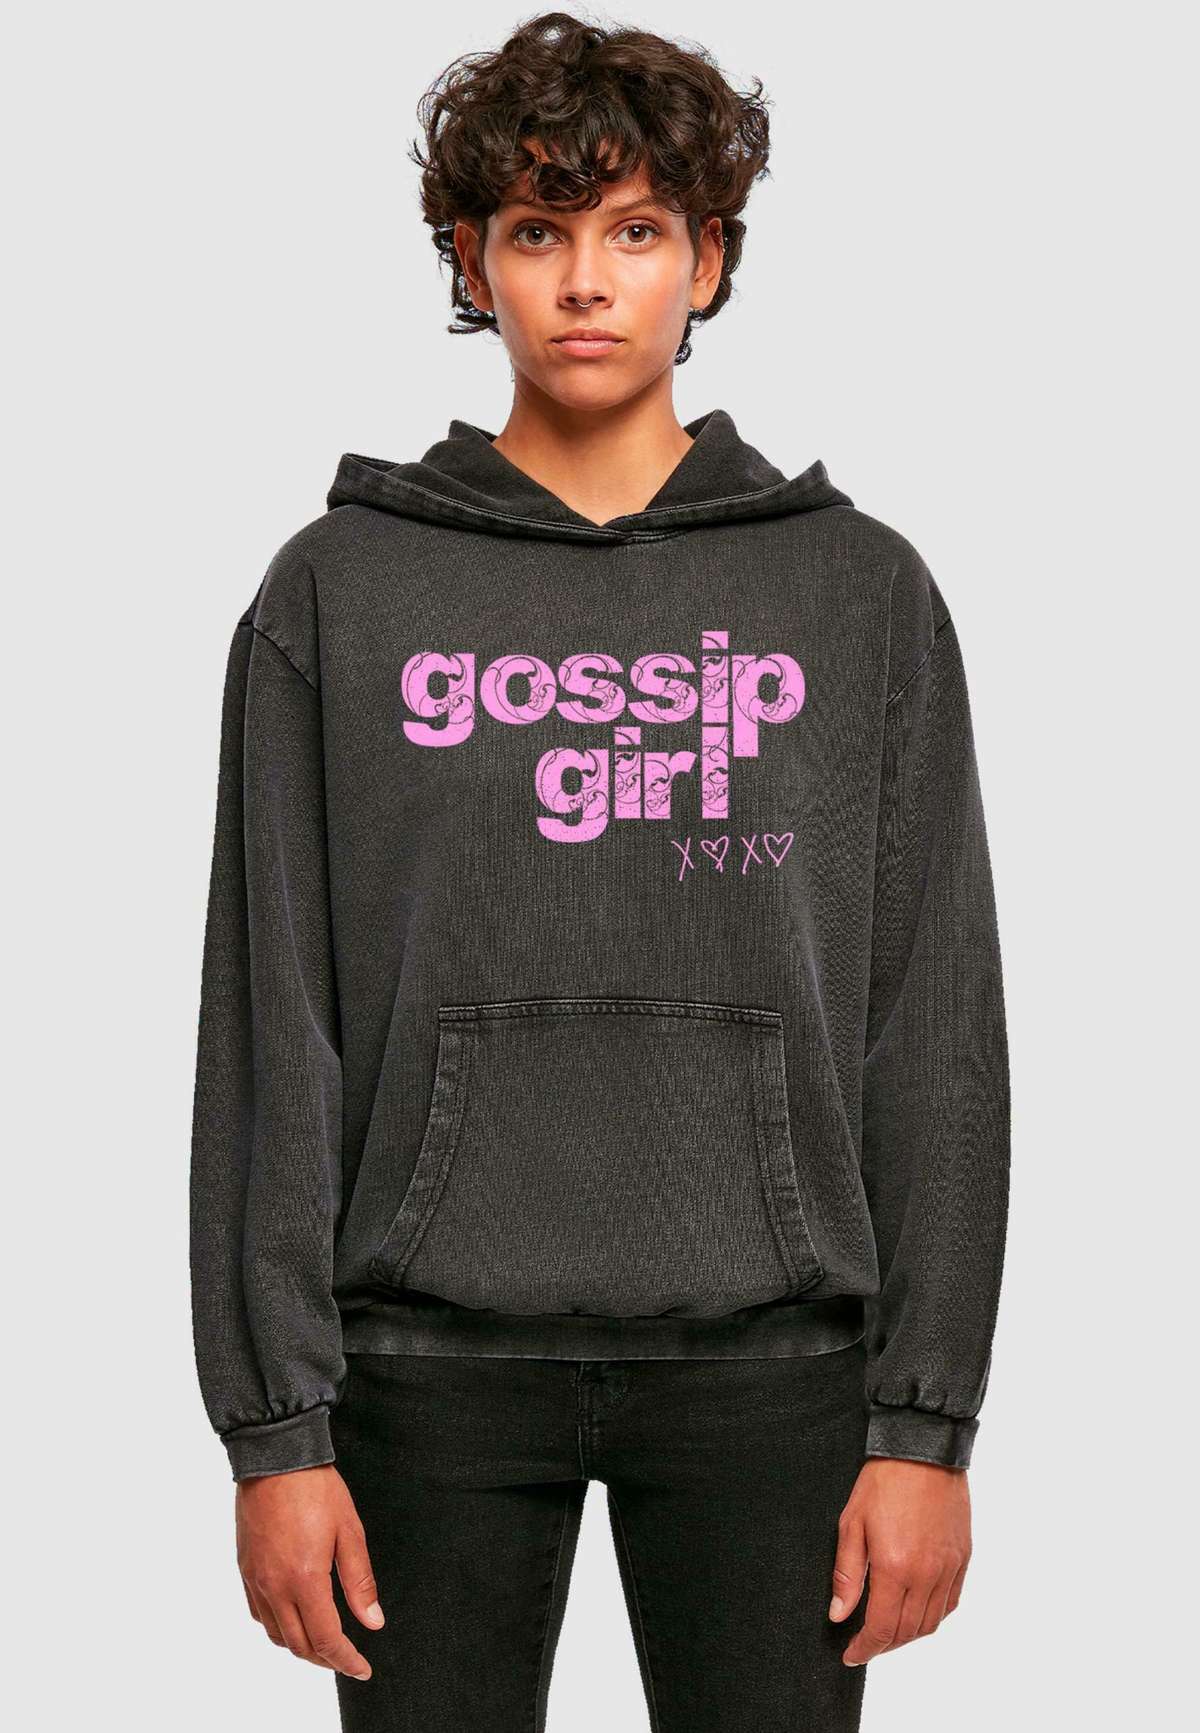 Пуловер с капюшоном GOSSIP GIRL